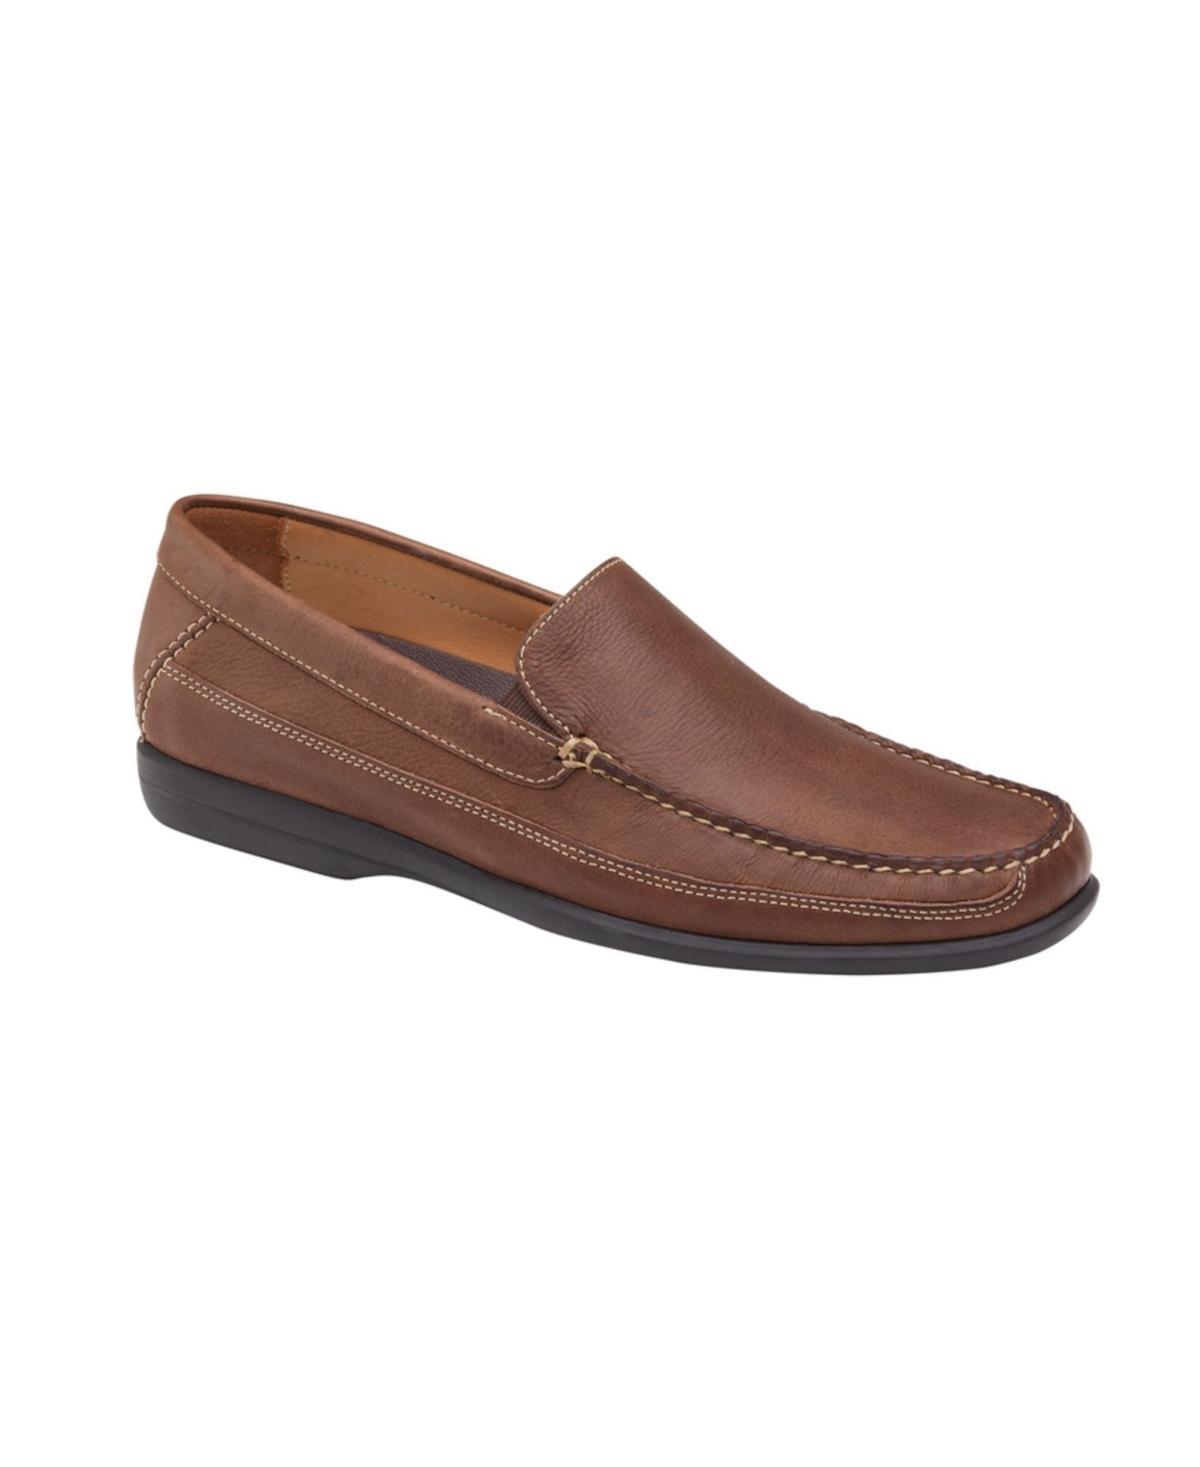 Johnston & Murphy Locklin Venetian (Tan Oiled Full Grain) Men's Shoes Product Image